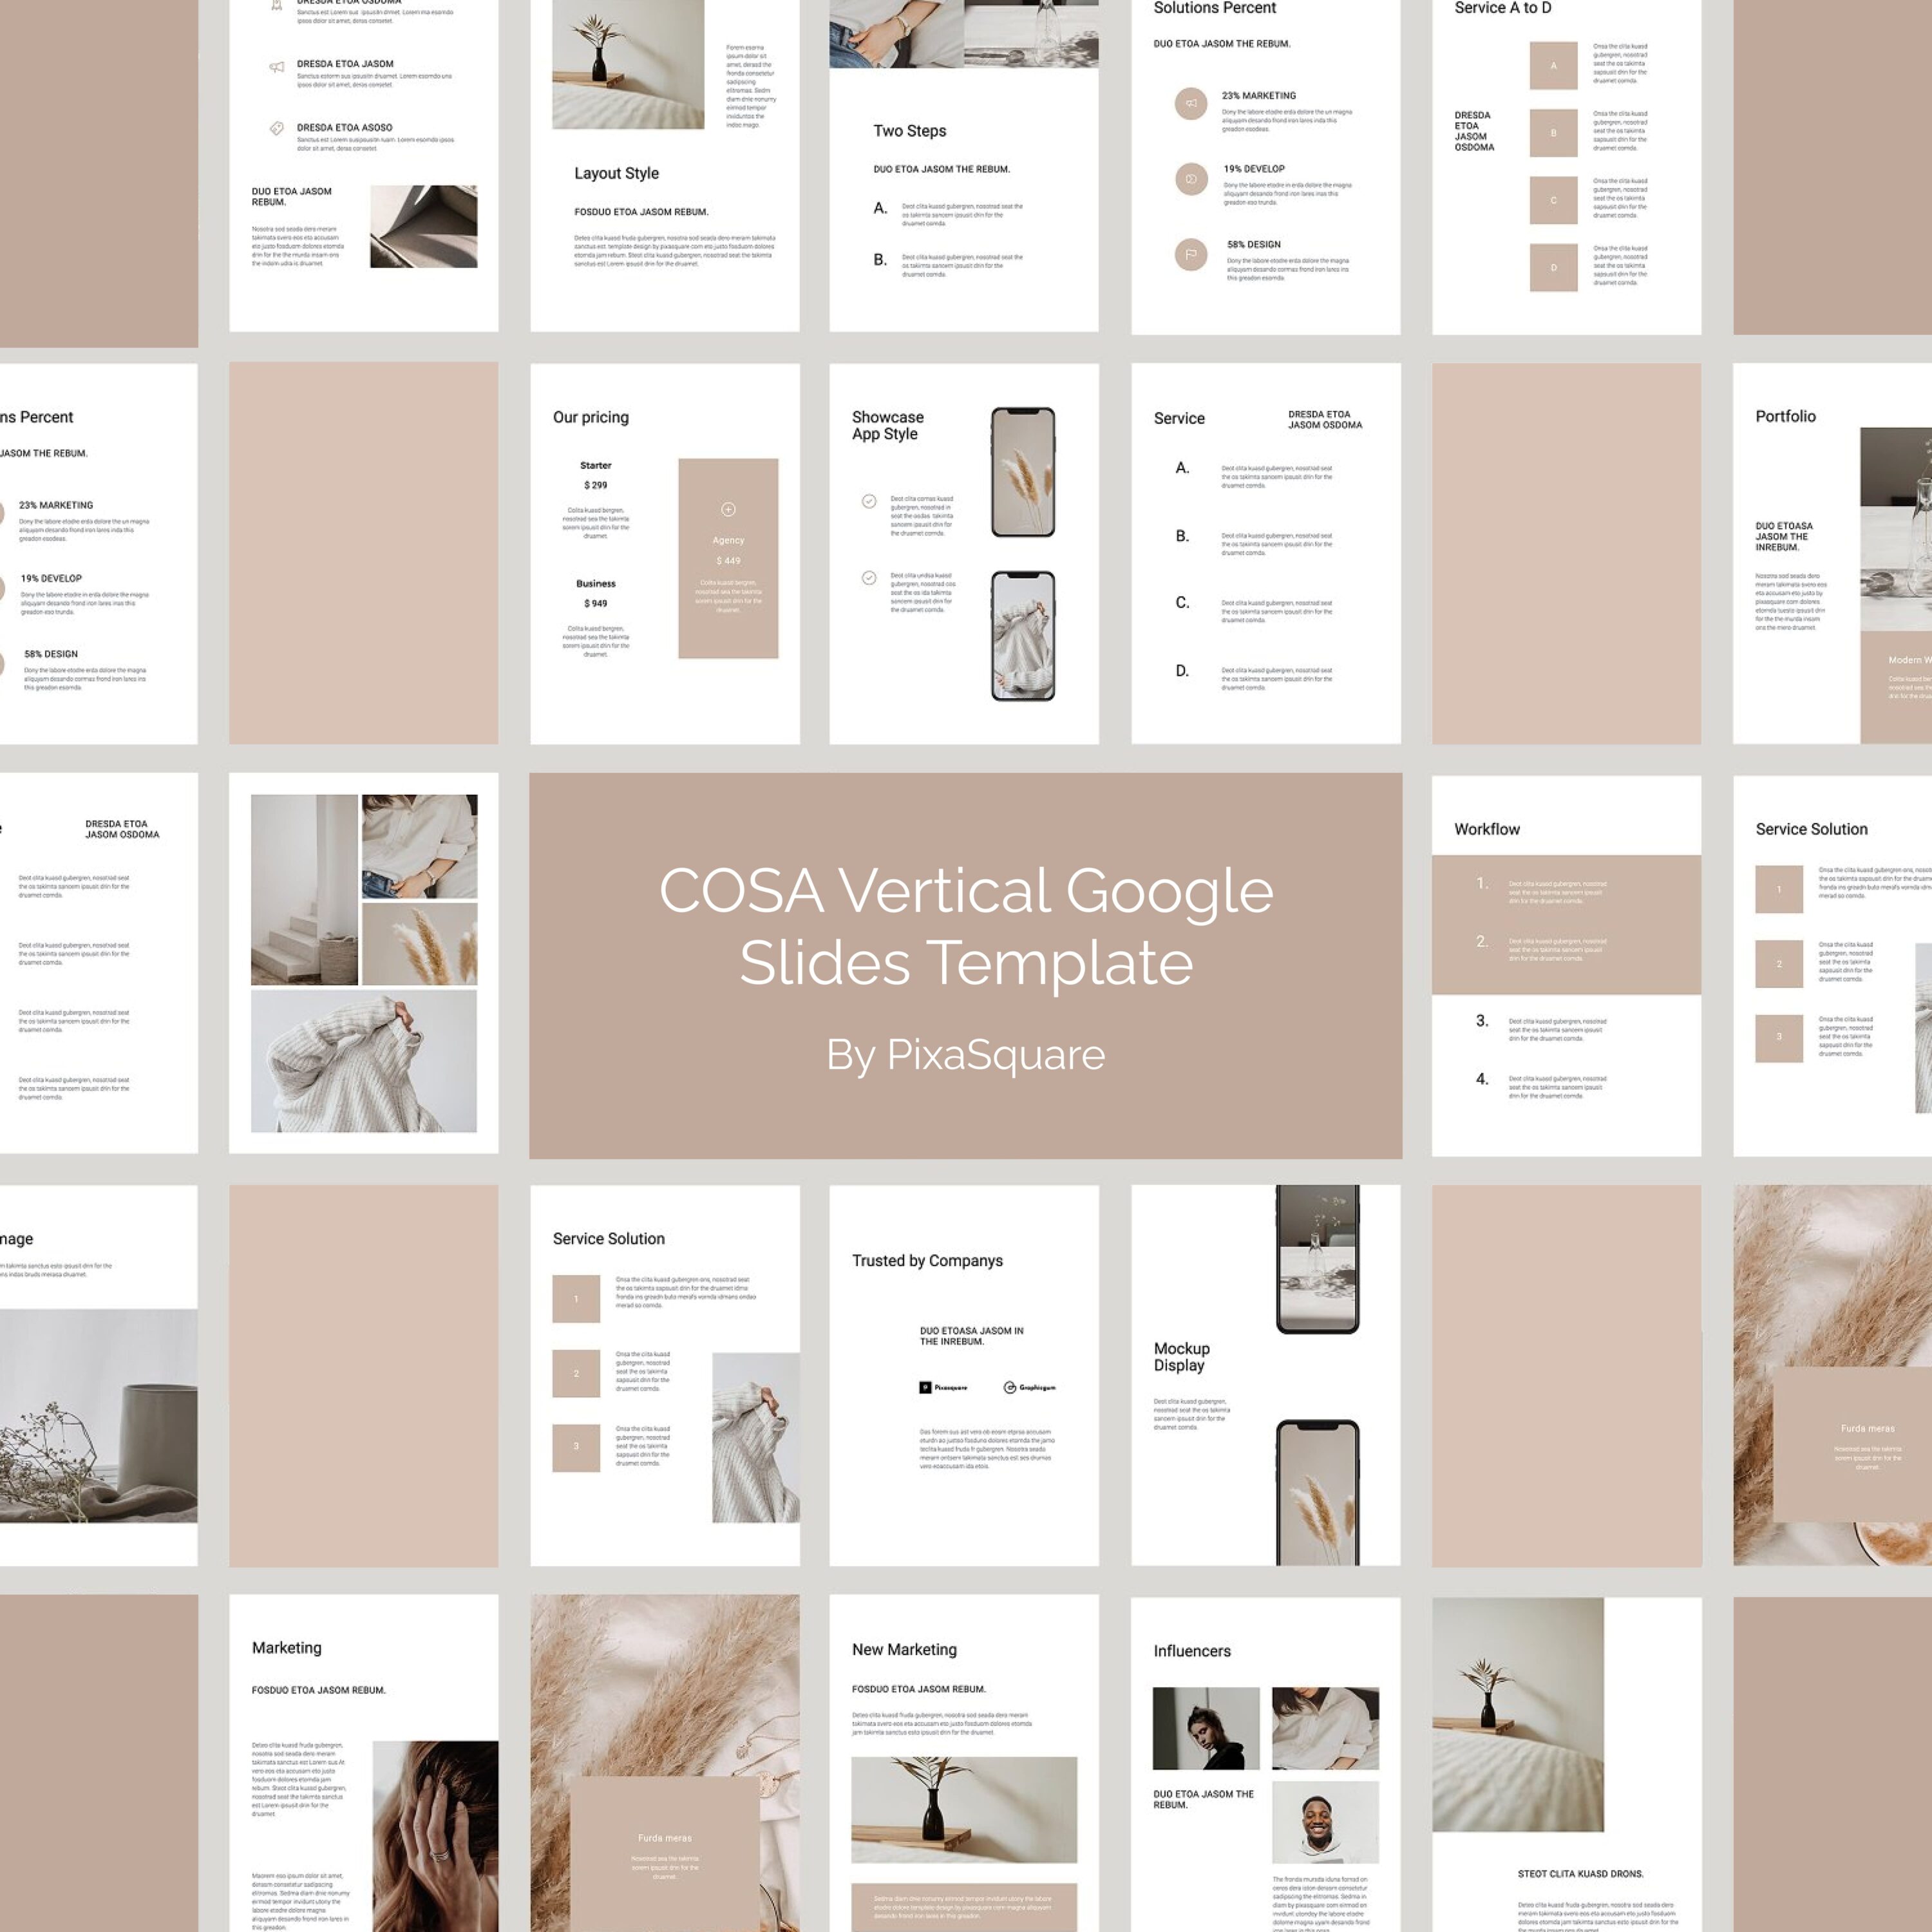 COSA Vertical Google Slides Template.